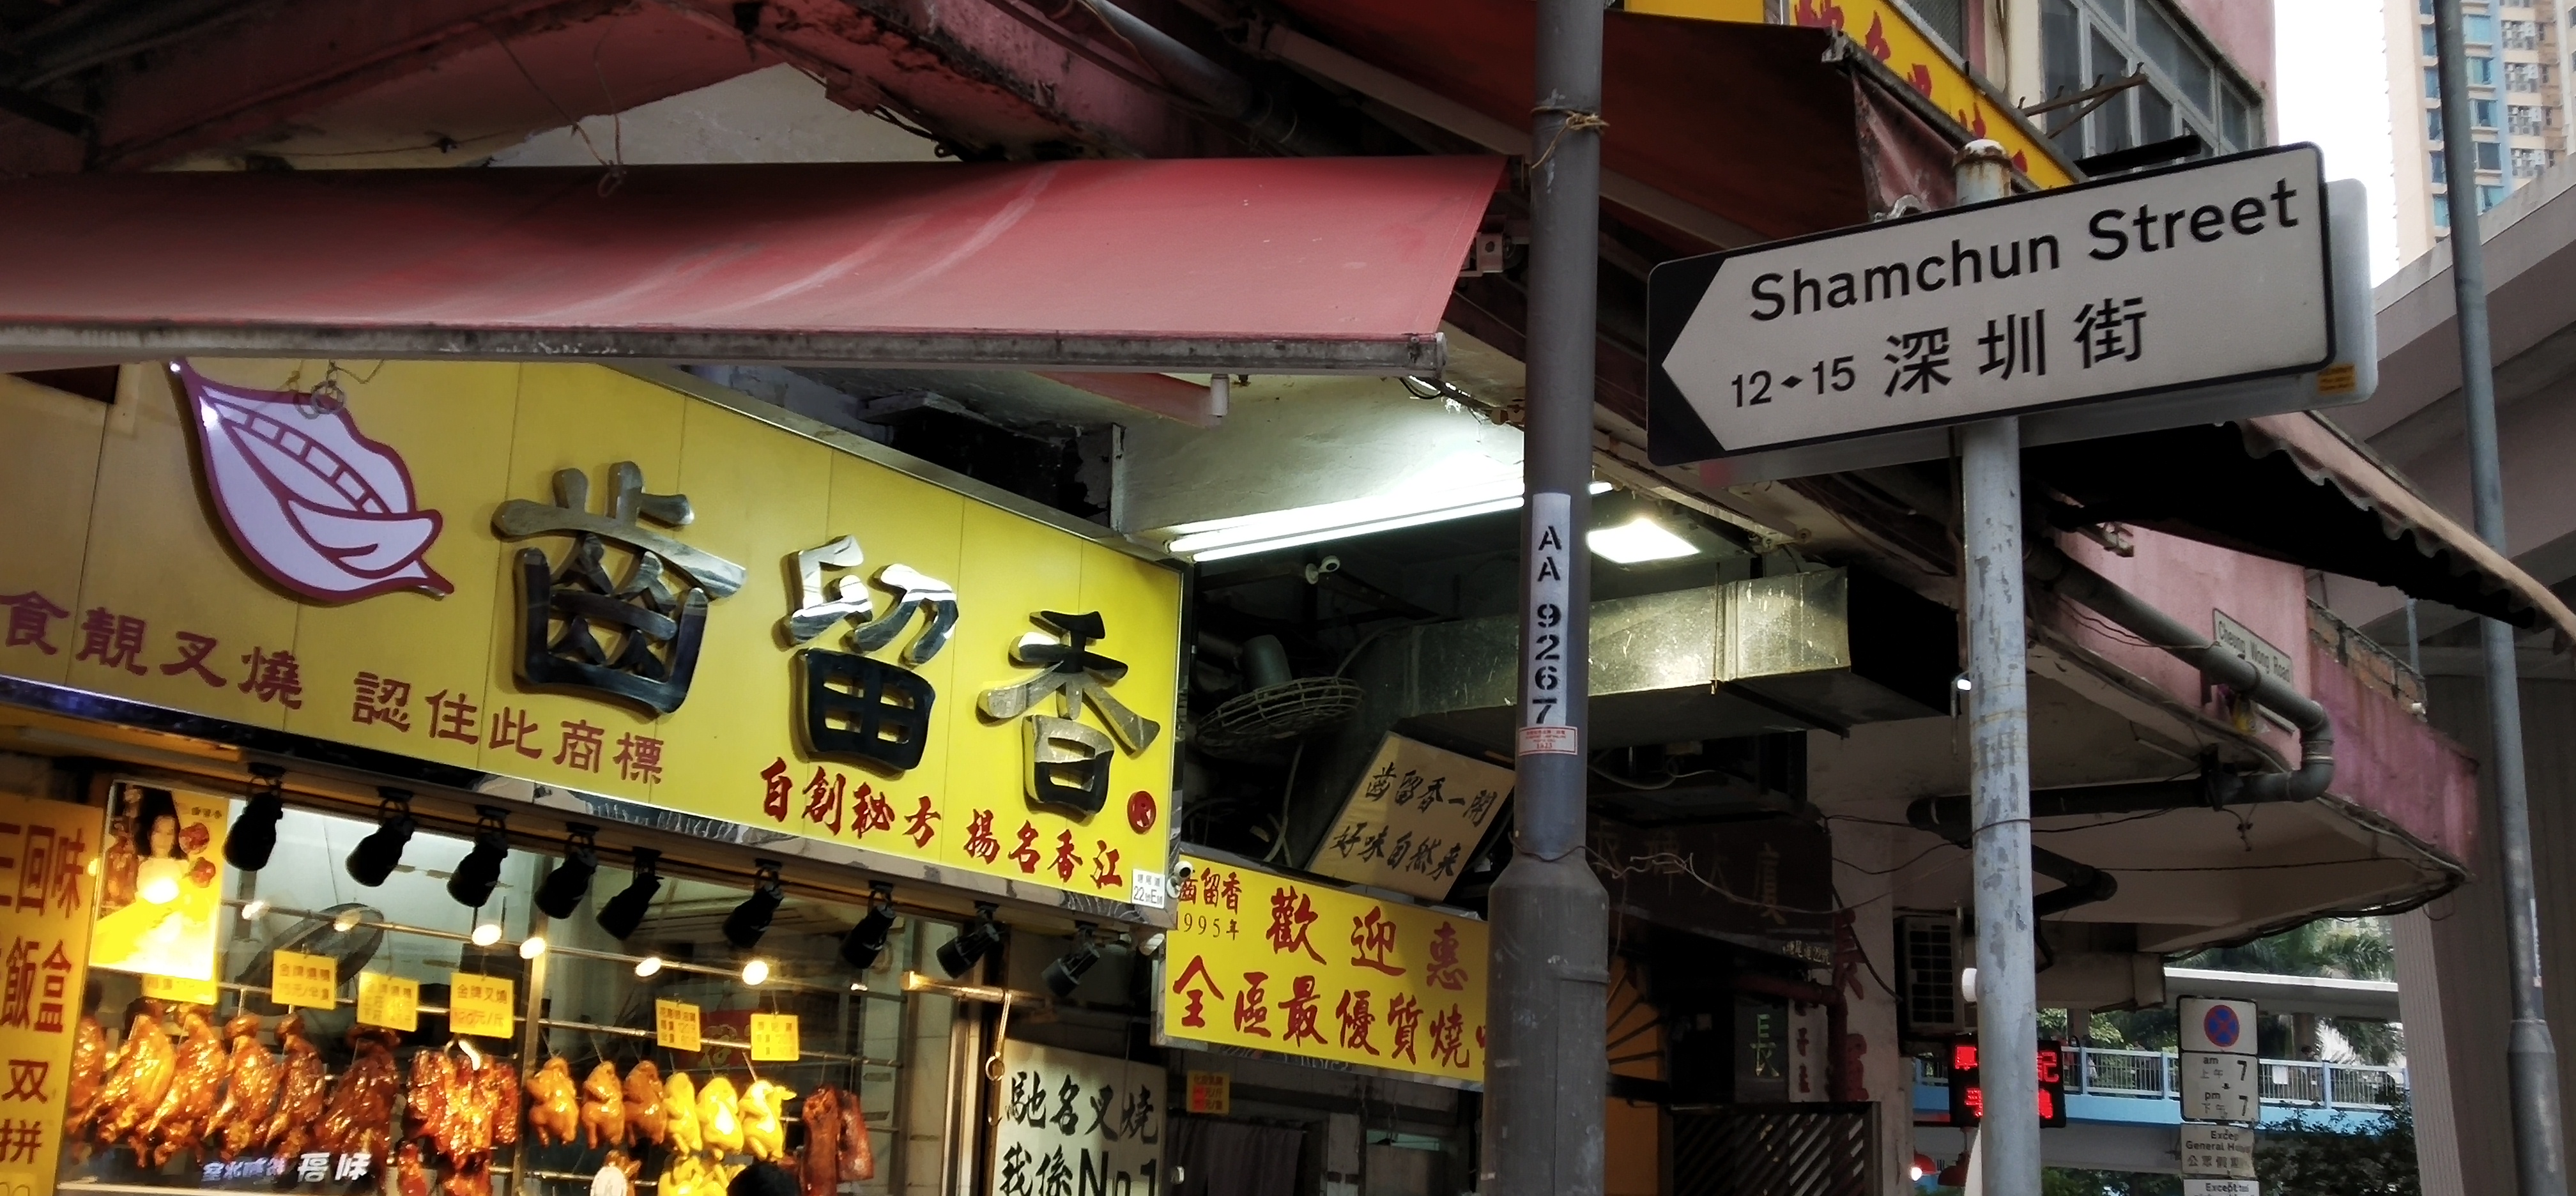 Sham Chun Street's cooked food shop.